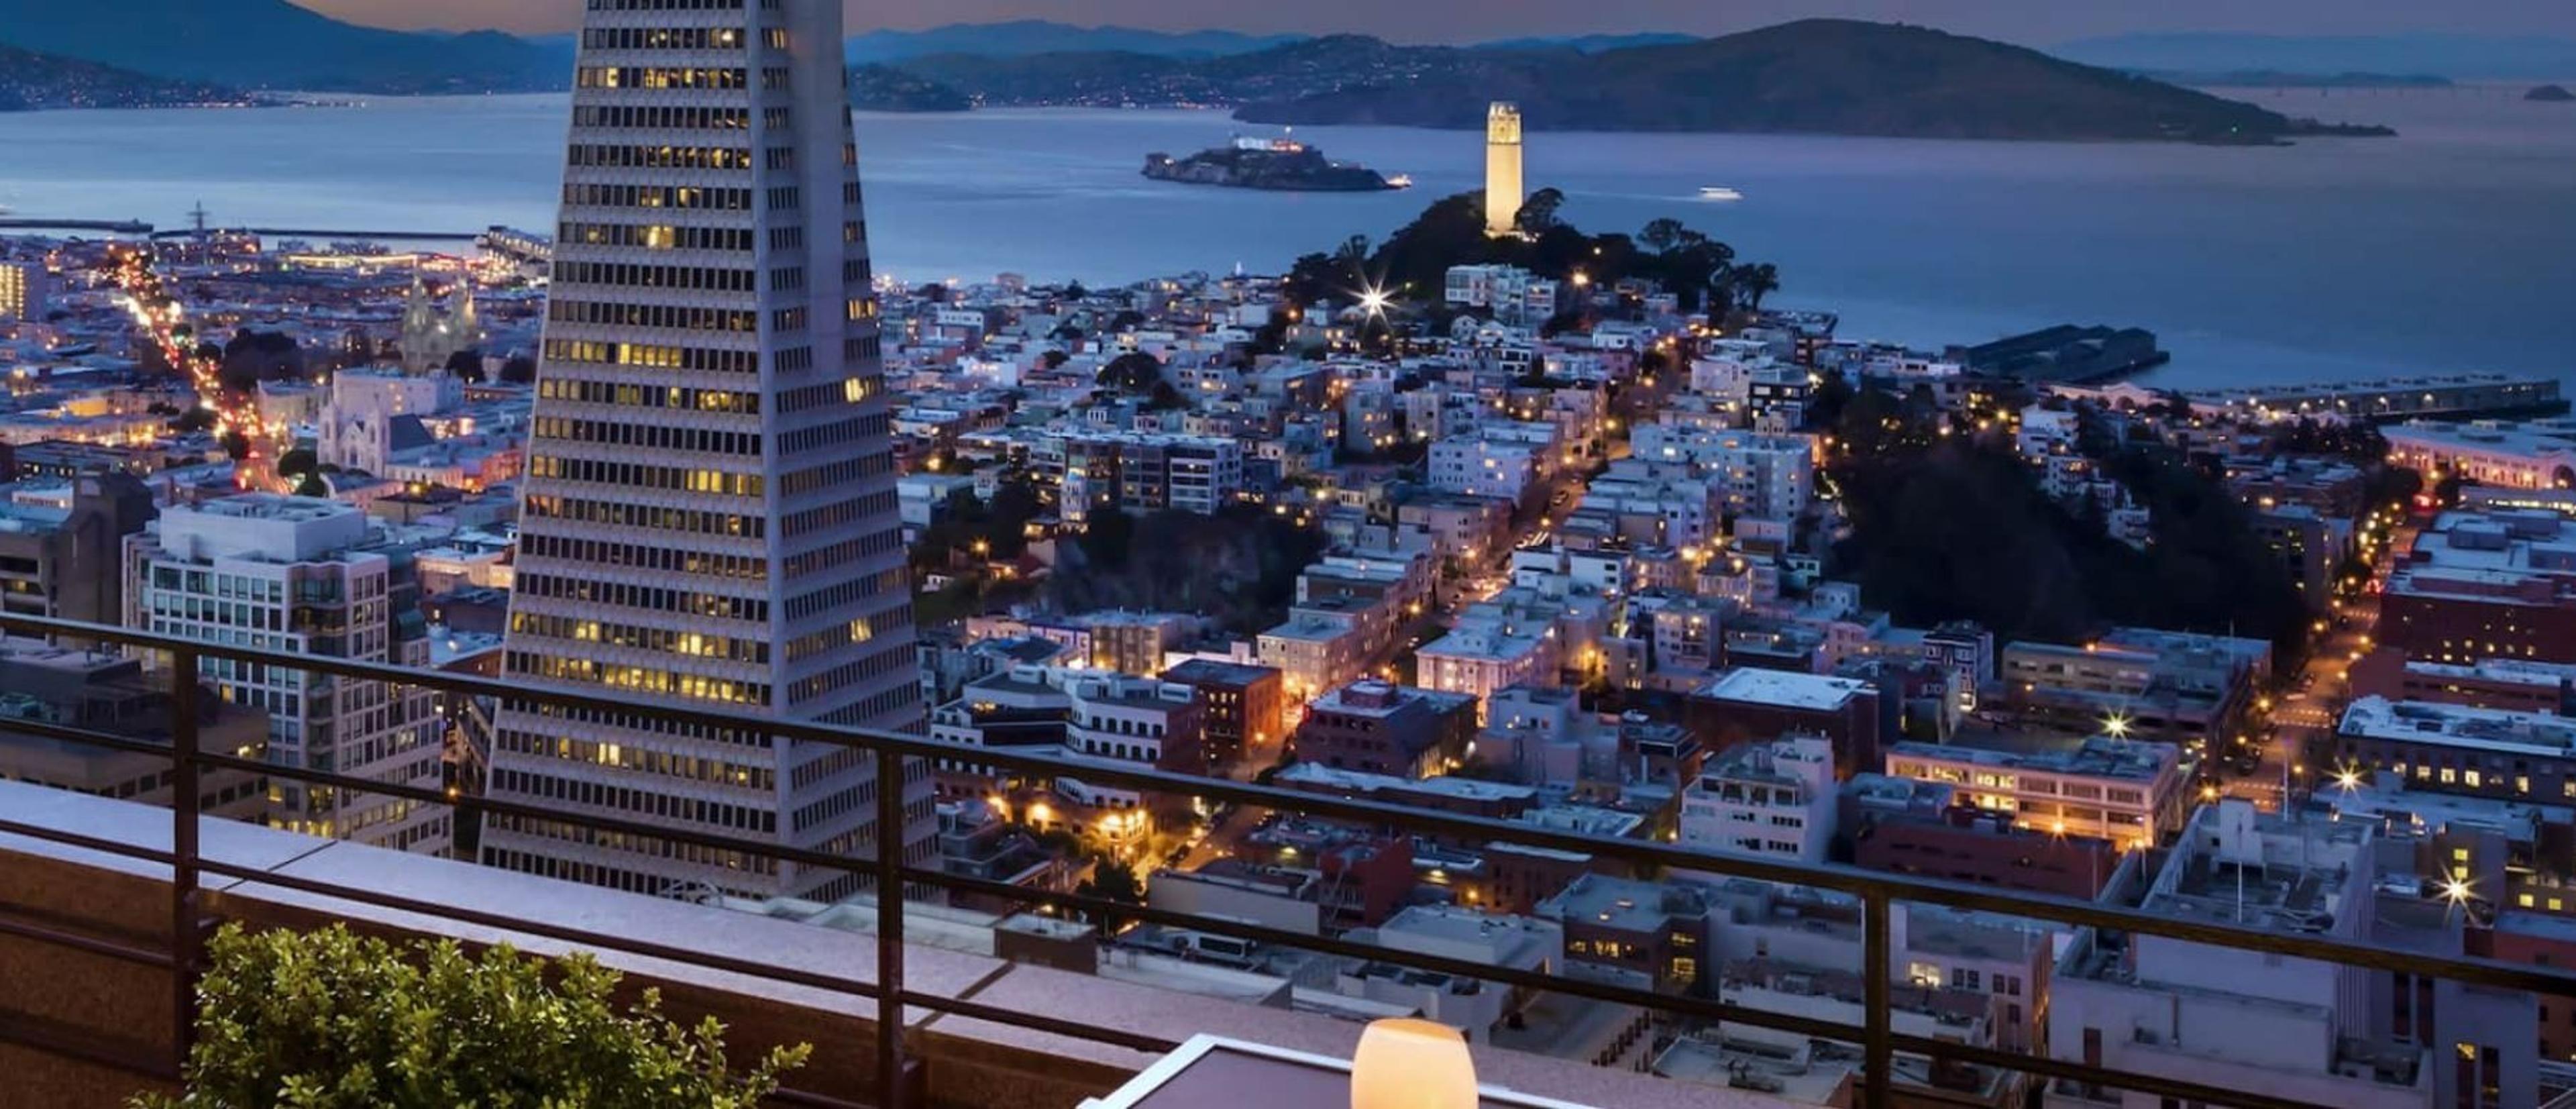 Four Seasons Hotel San Francisco - San Francisco, CA